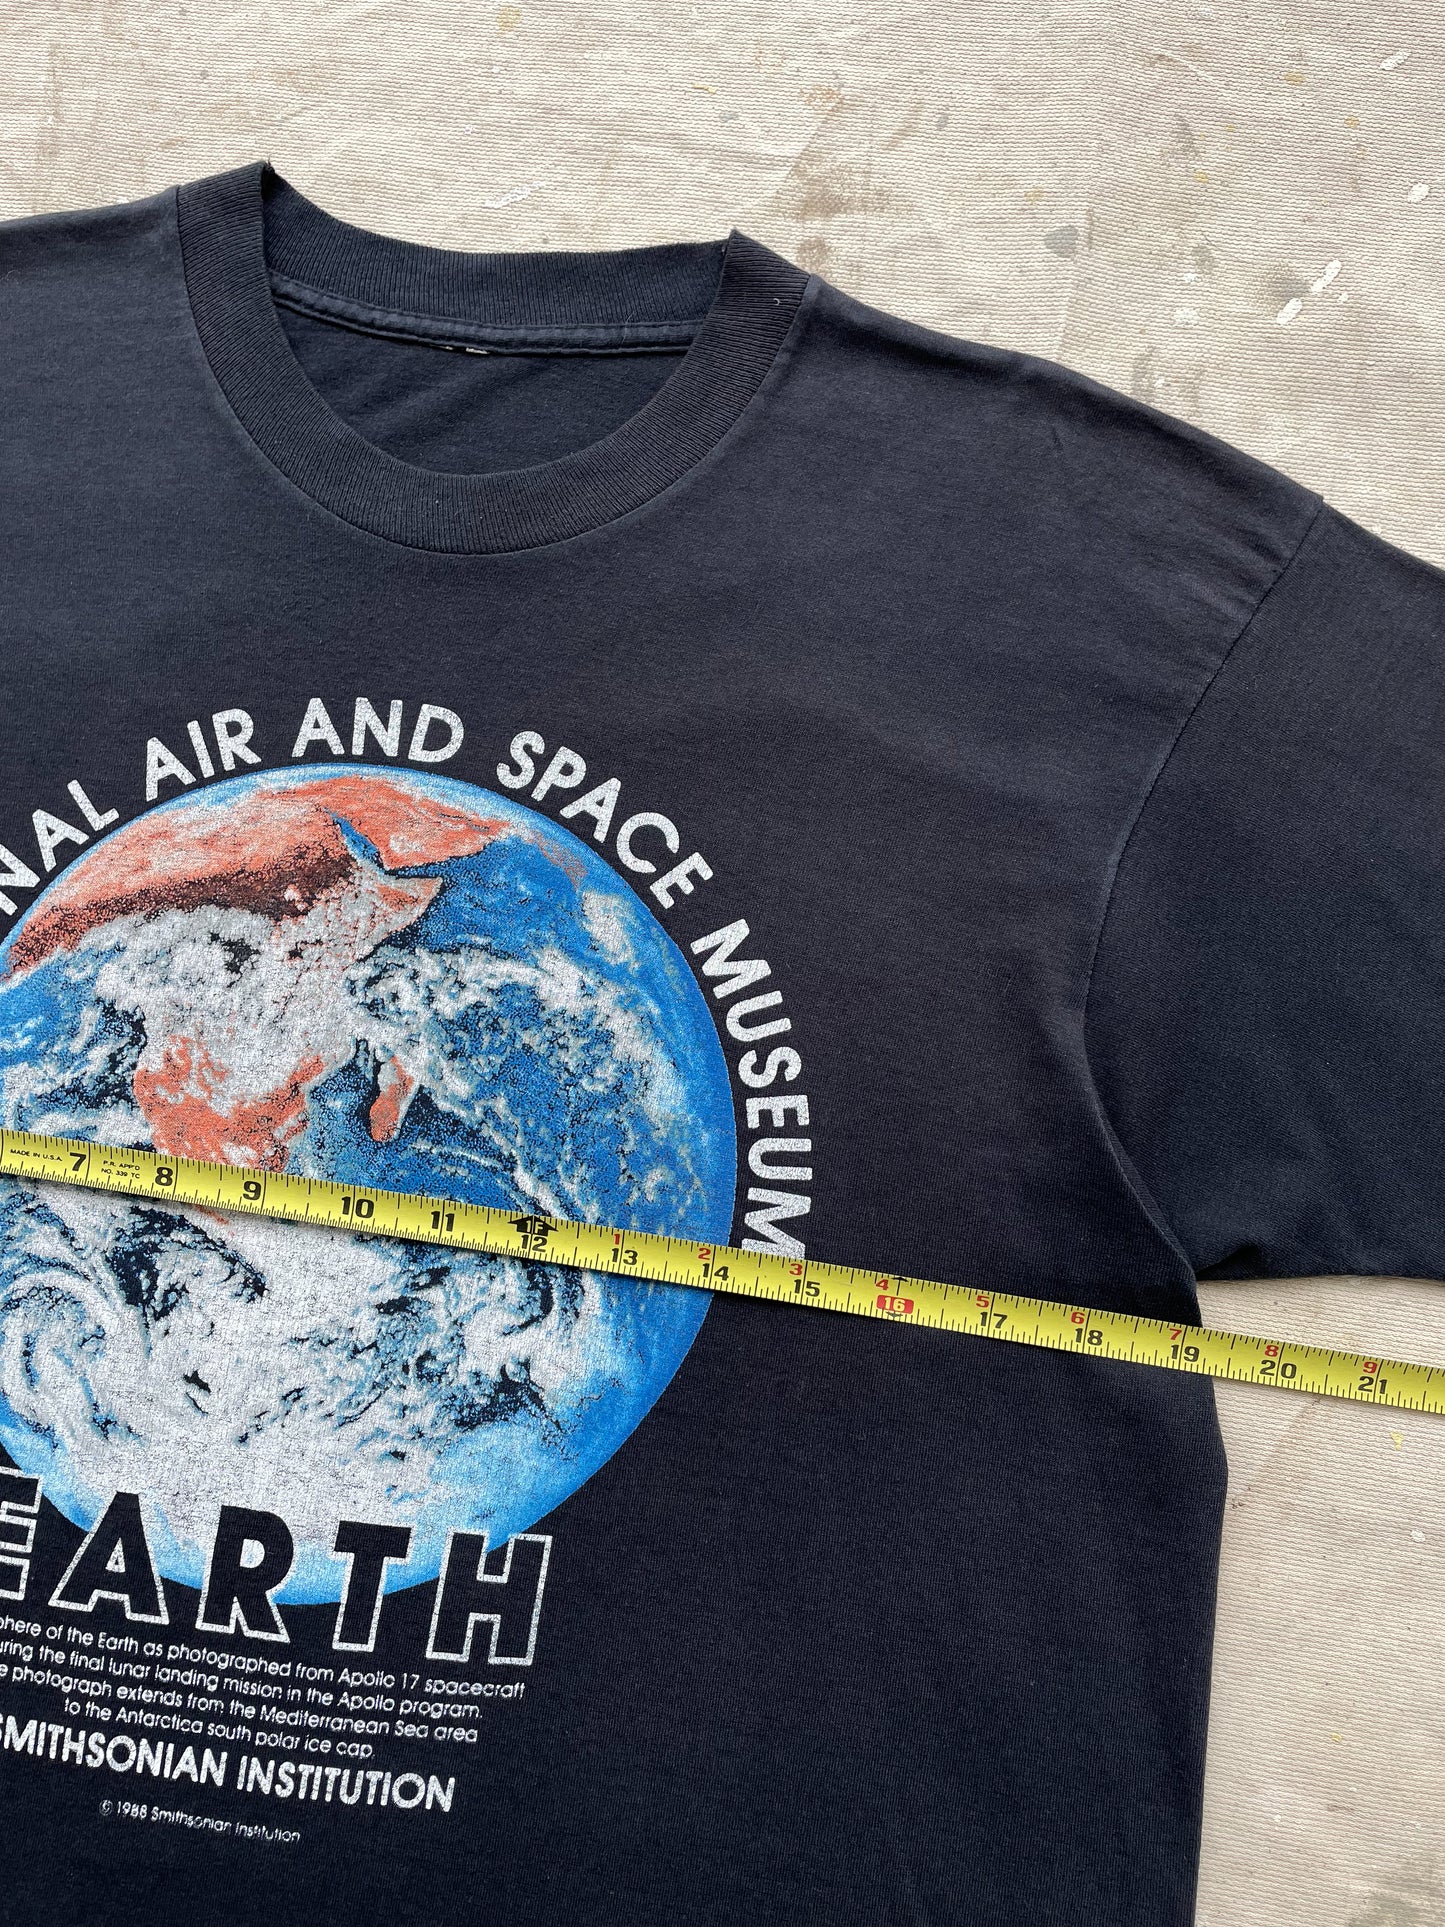 80's Smithsonian "Earth" T-Shirt—[M]